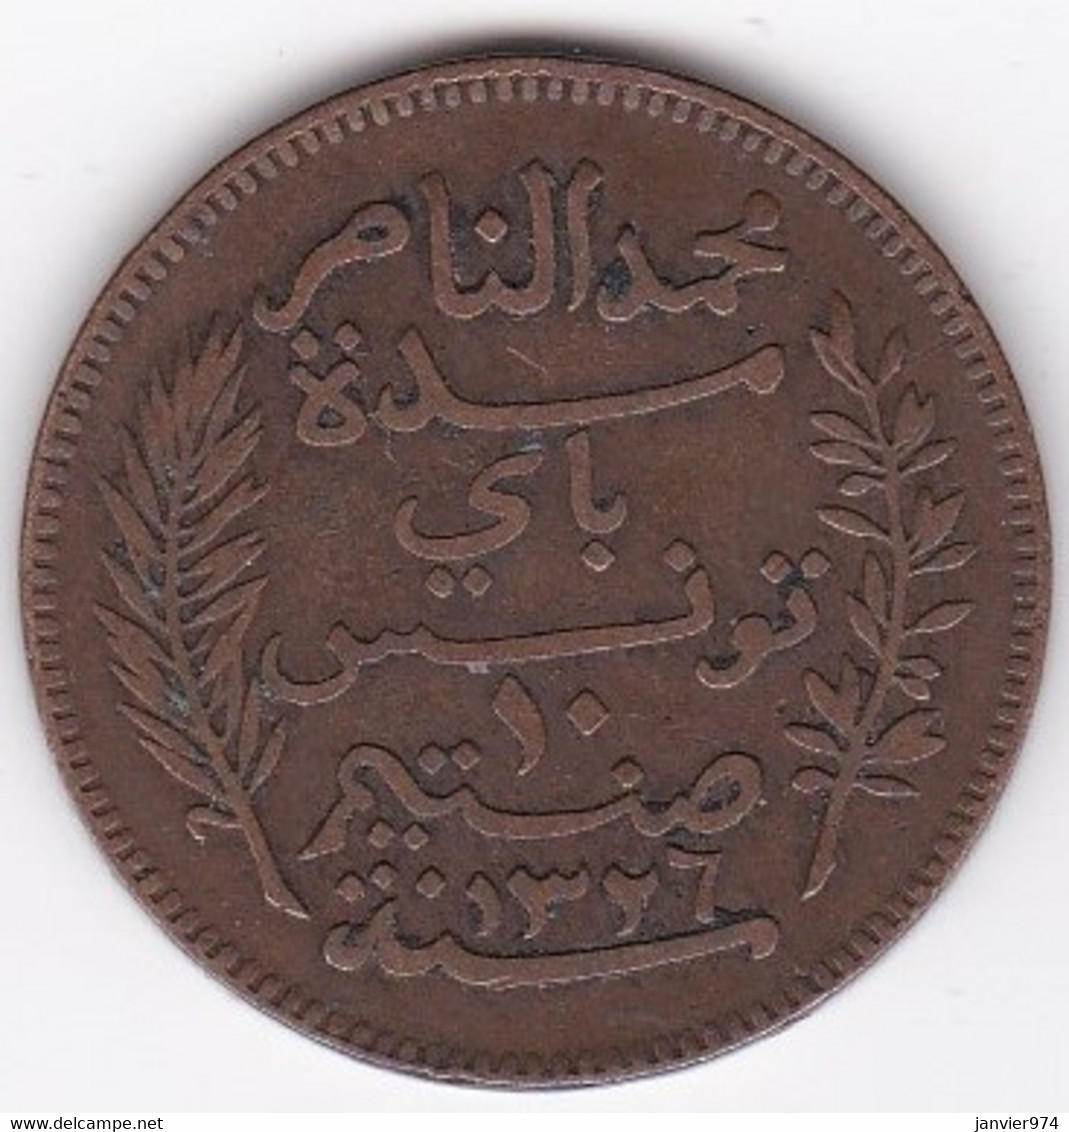 Protectorat Français 10 Centimes 1908 A, En Bronze,  Lec#101 - Tunisia